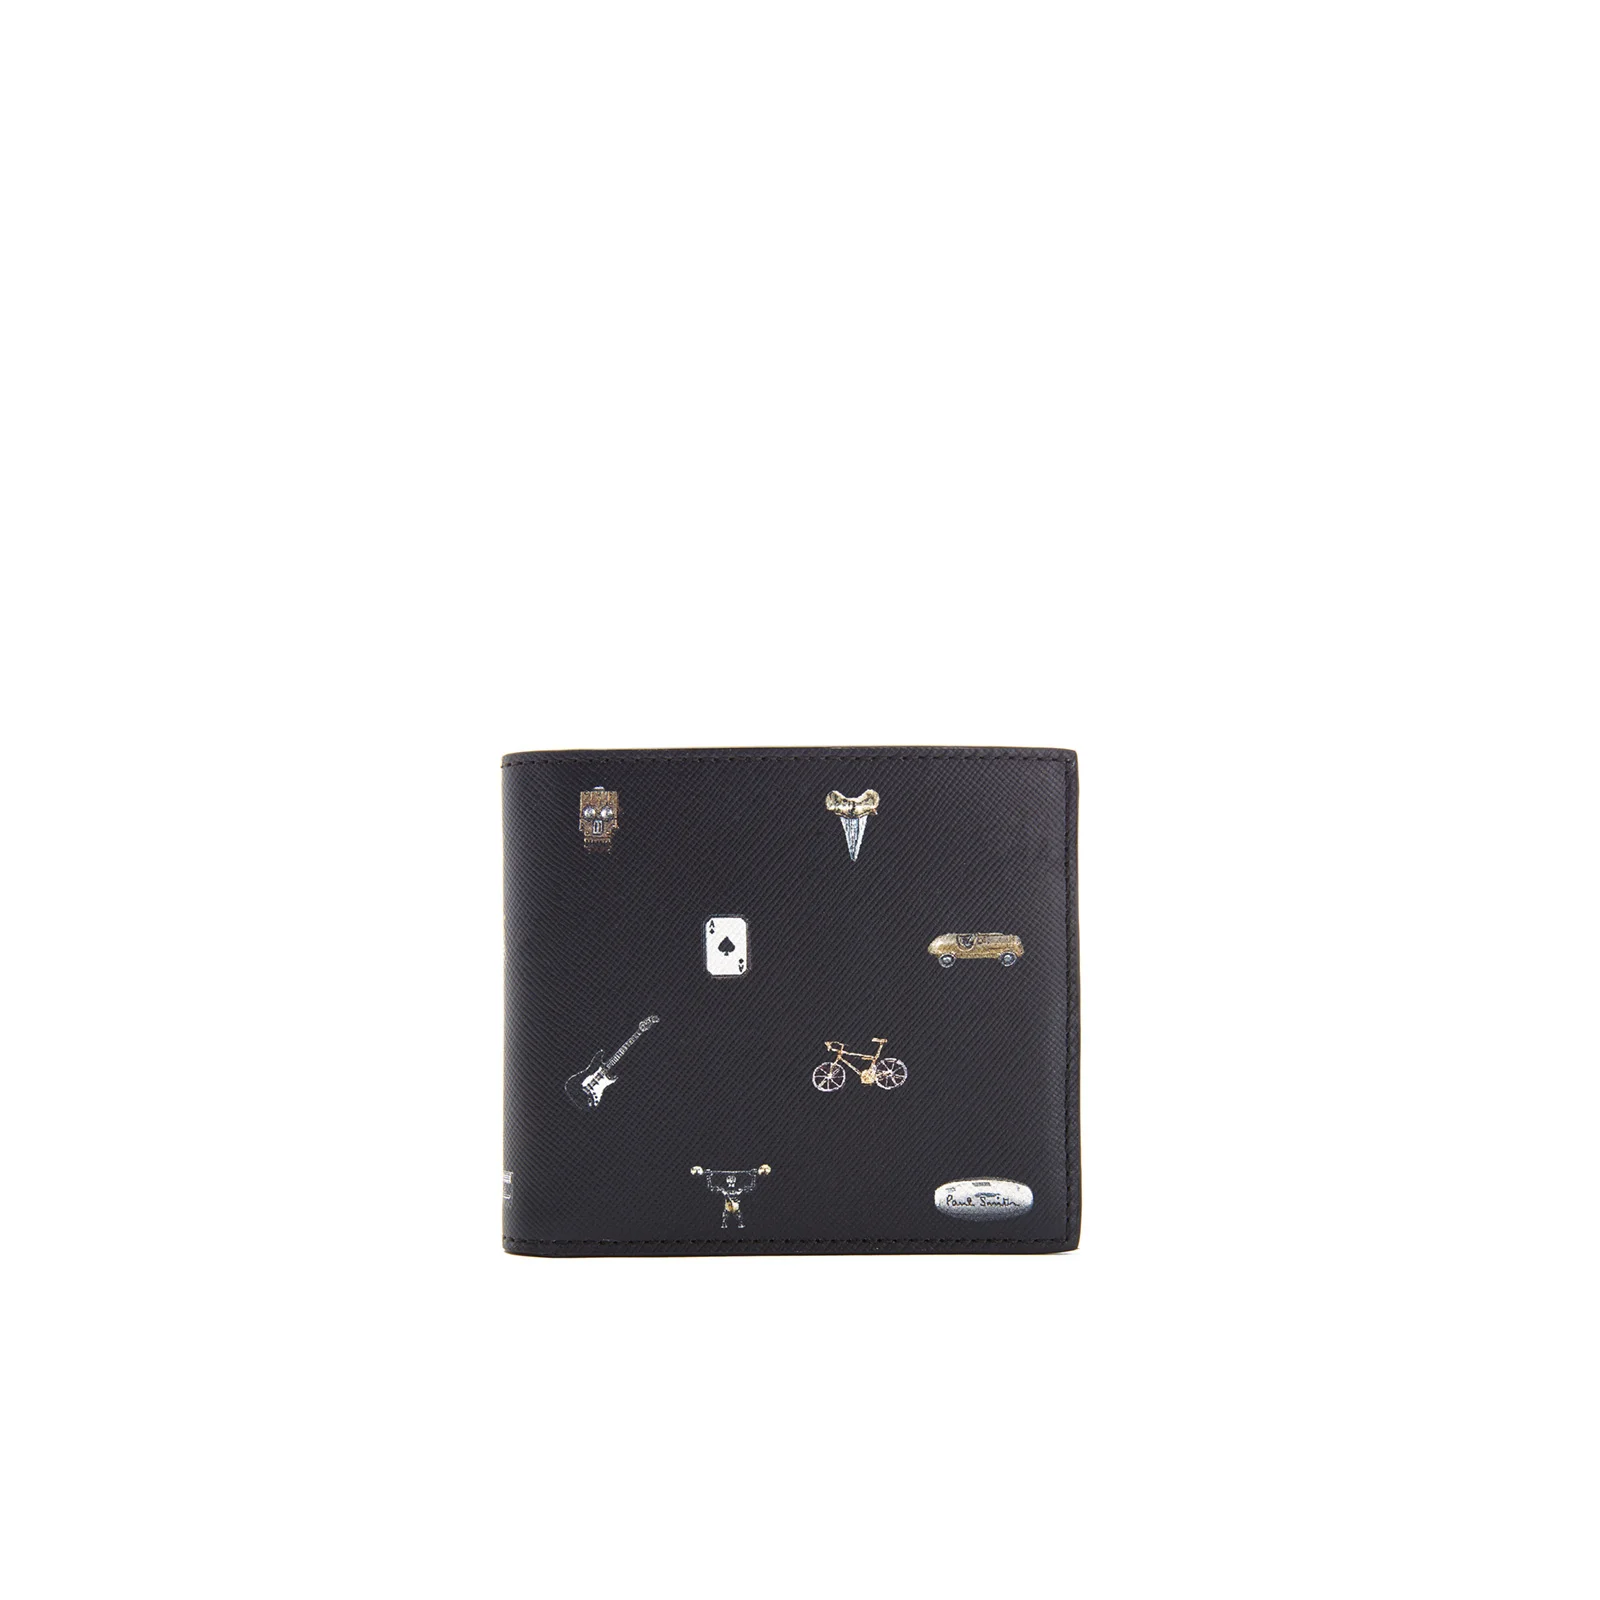 Paul Smith Men's Cufflink Print Leather Billfold Wallet - Black Image 1